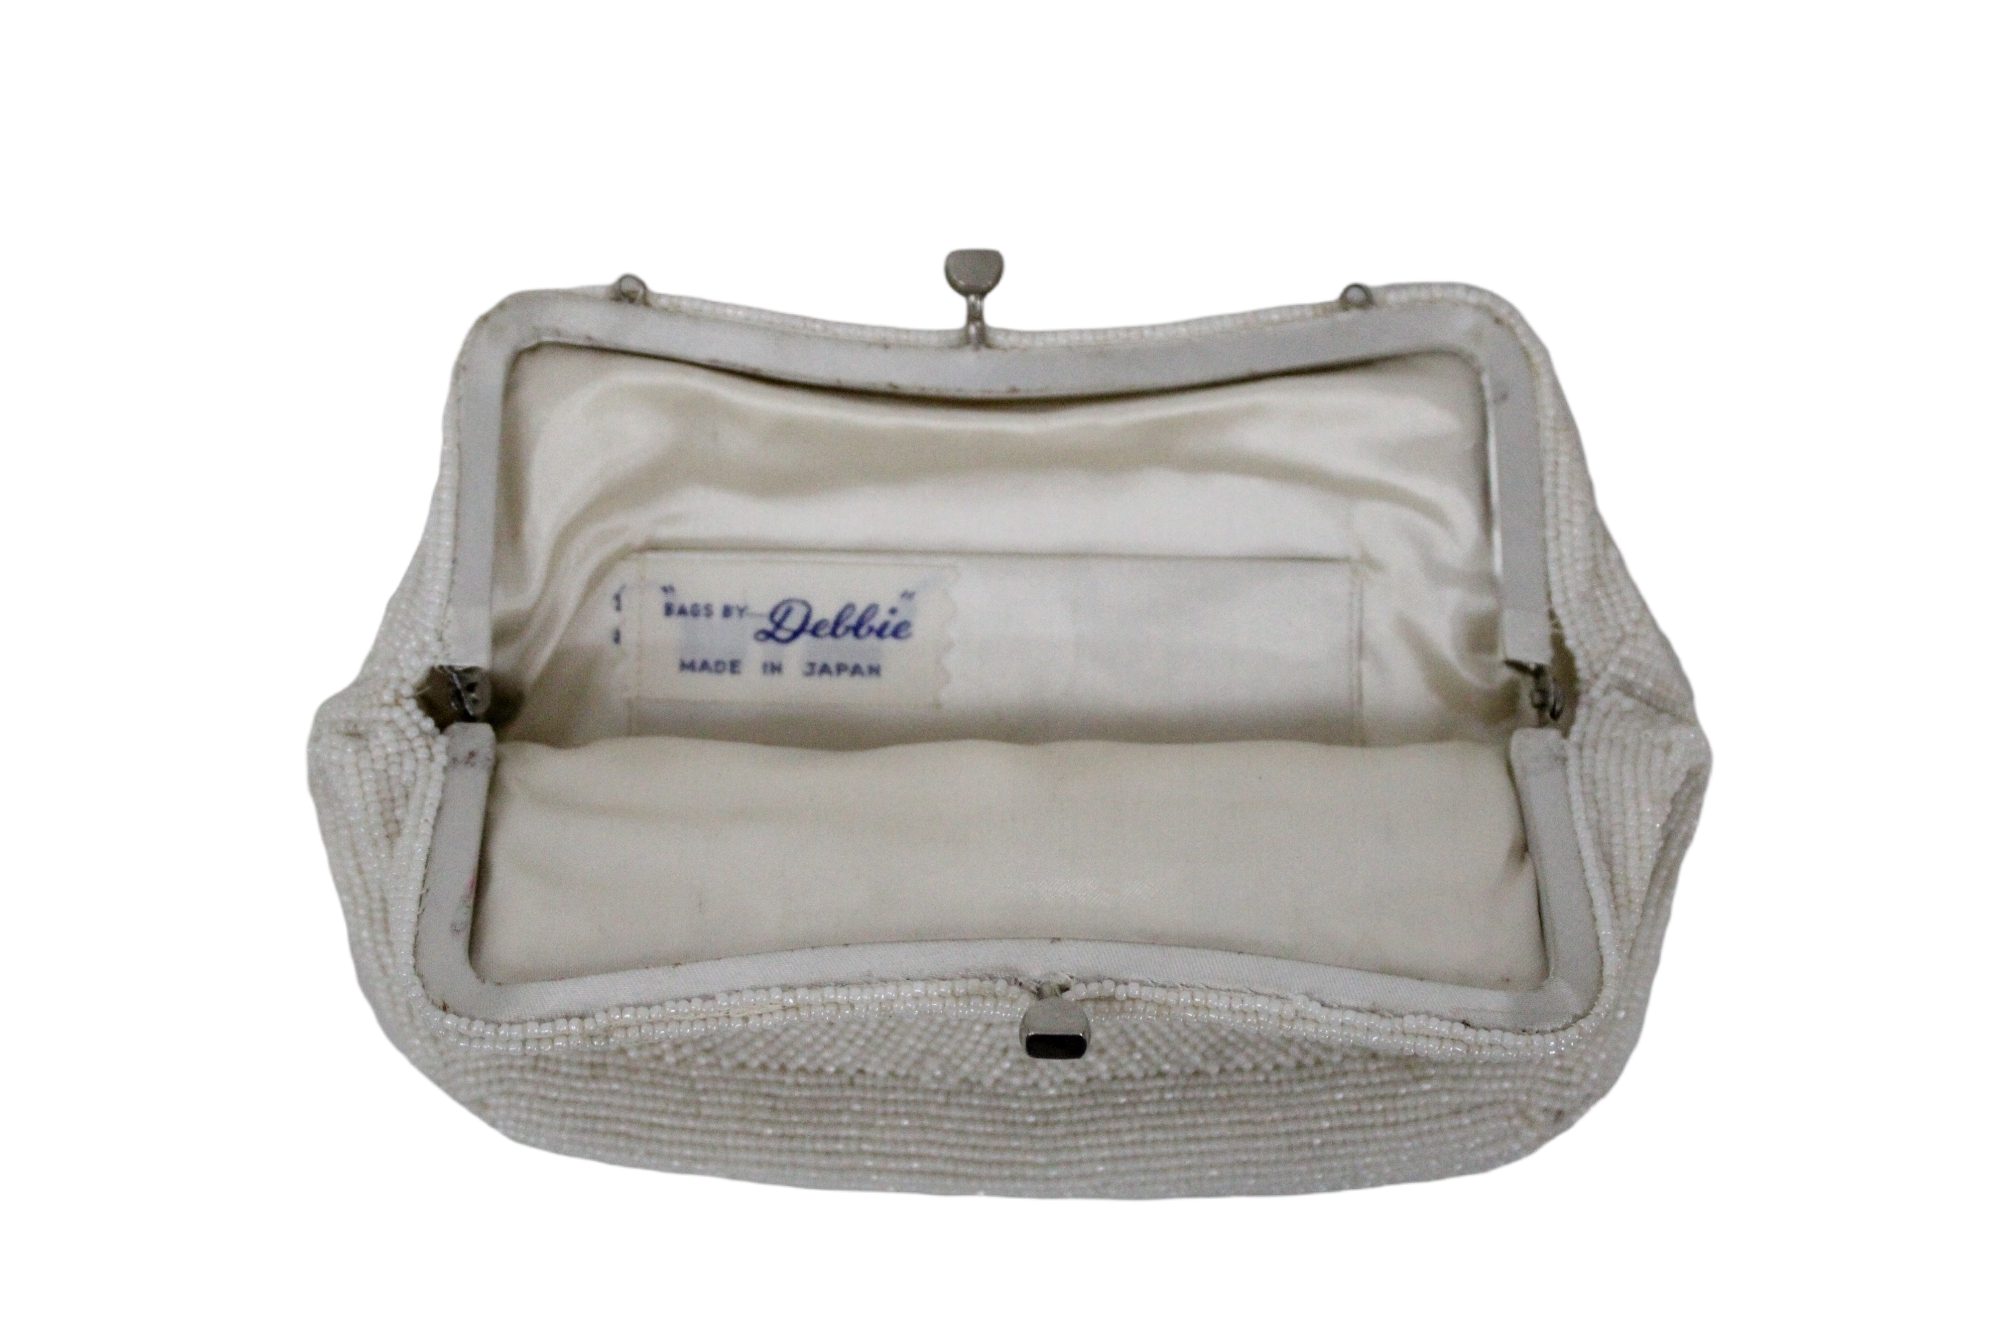 Bags By Debbie White Beaded Vintage Clutch